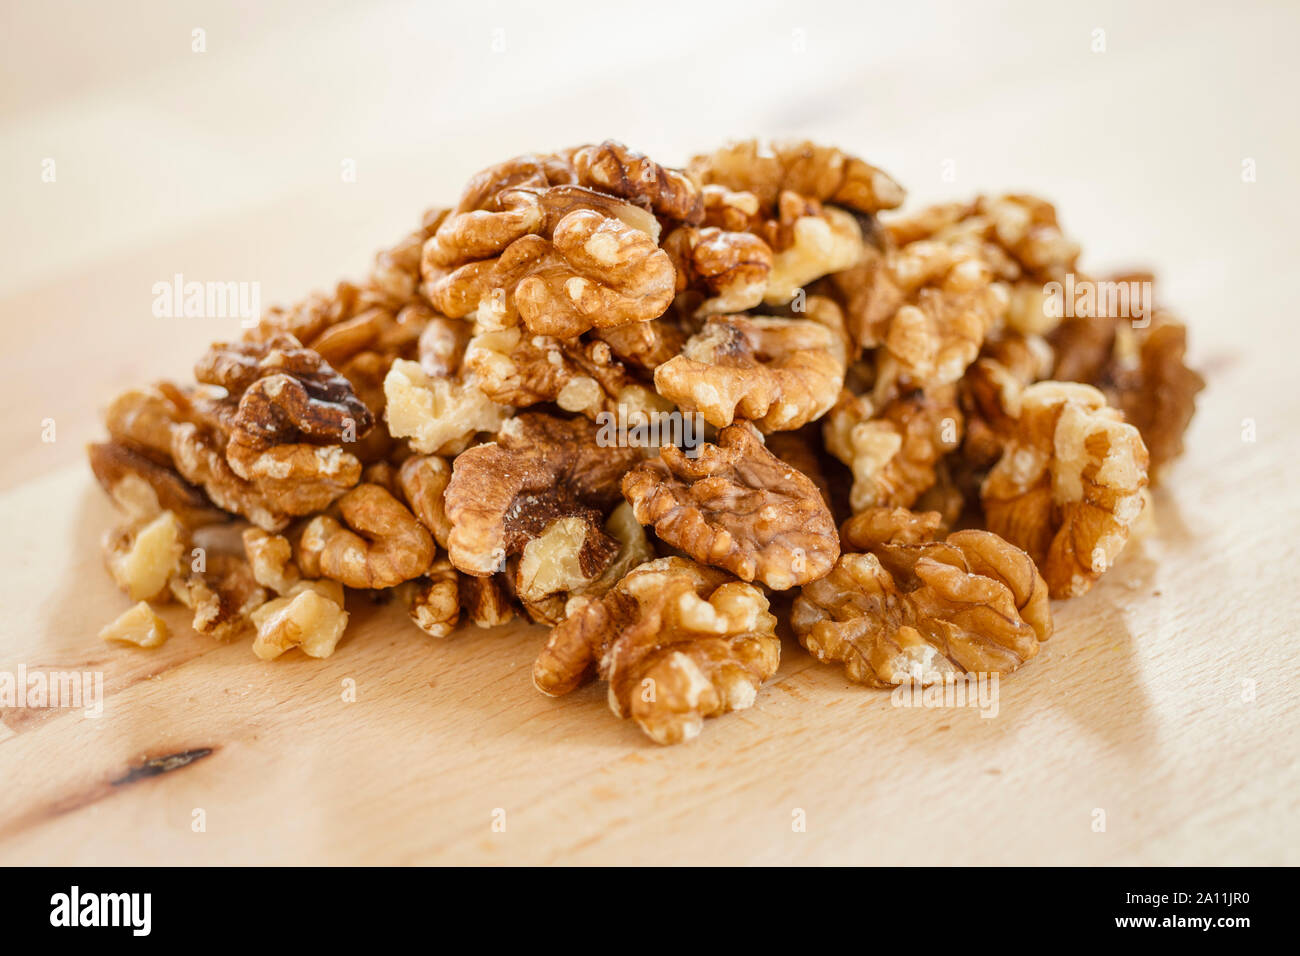 Pile of walnuts Stock Photo